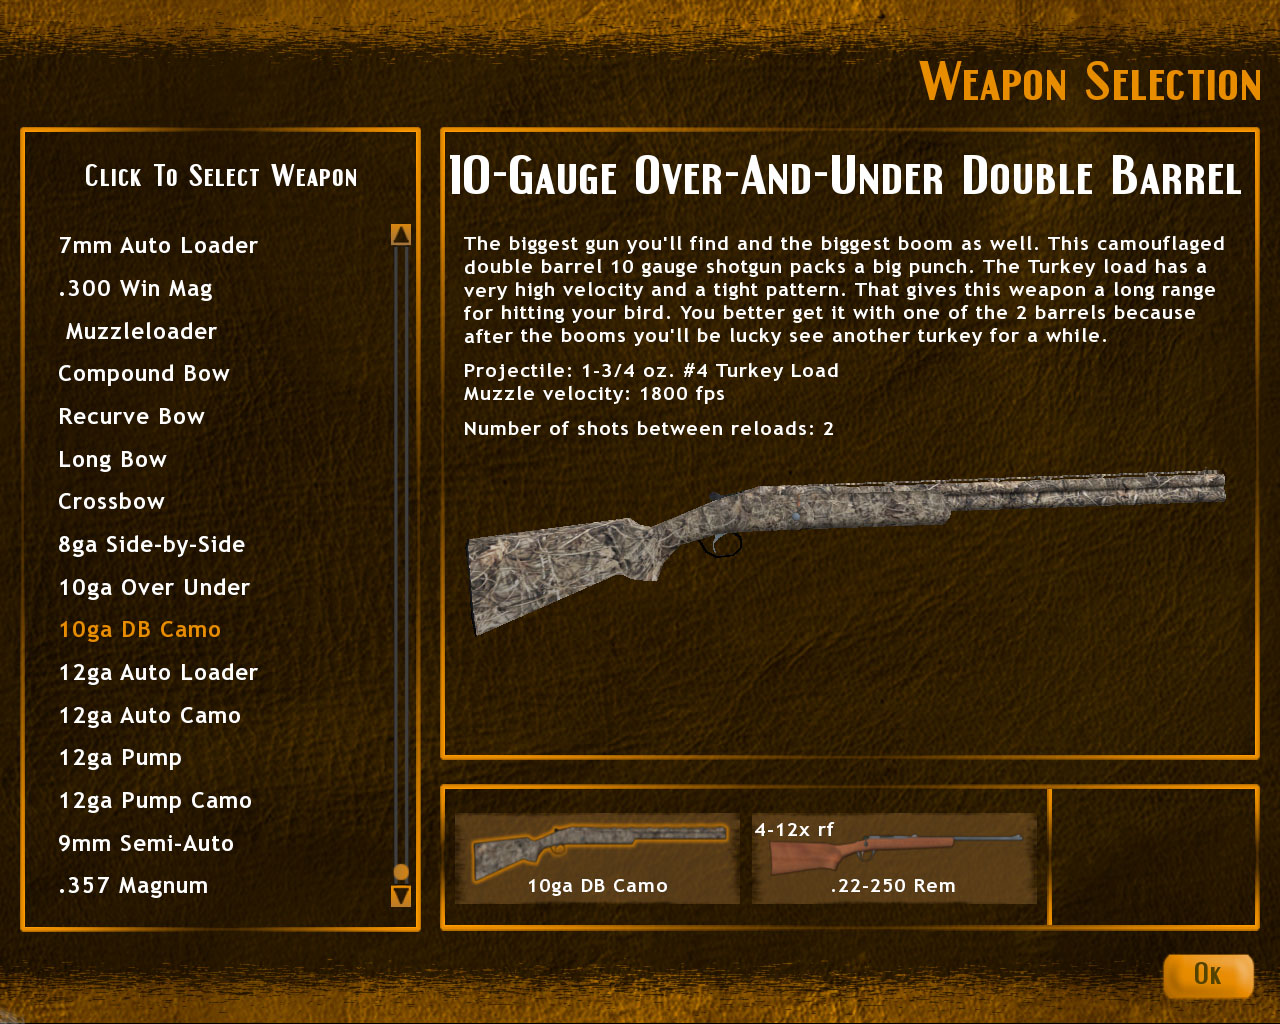 Hunting Unlimited 2010 screenshot